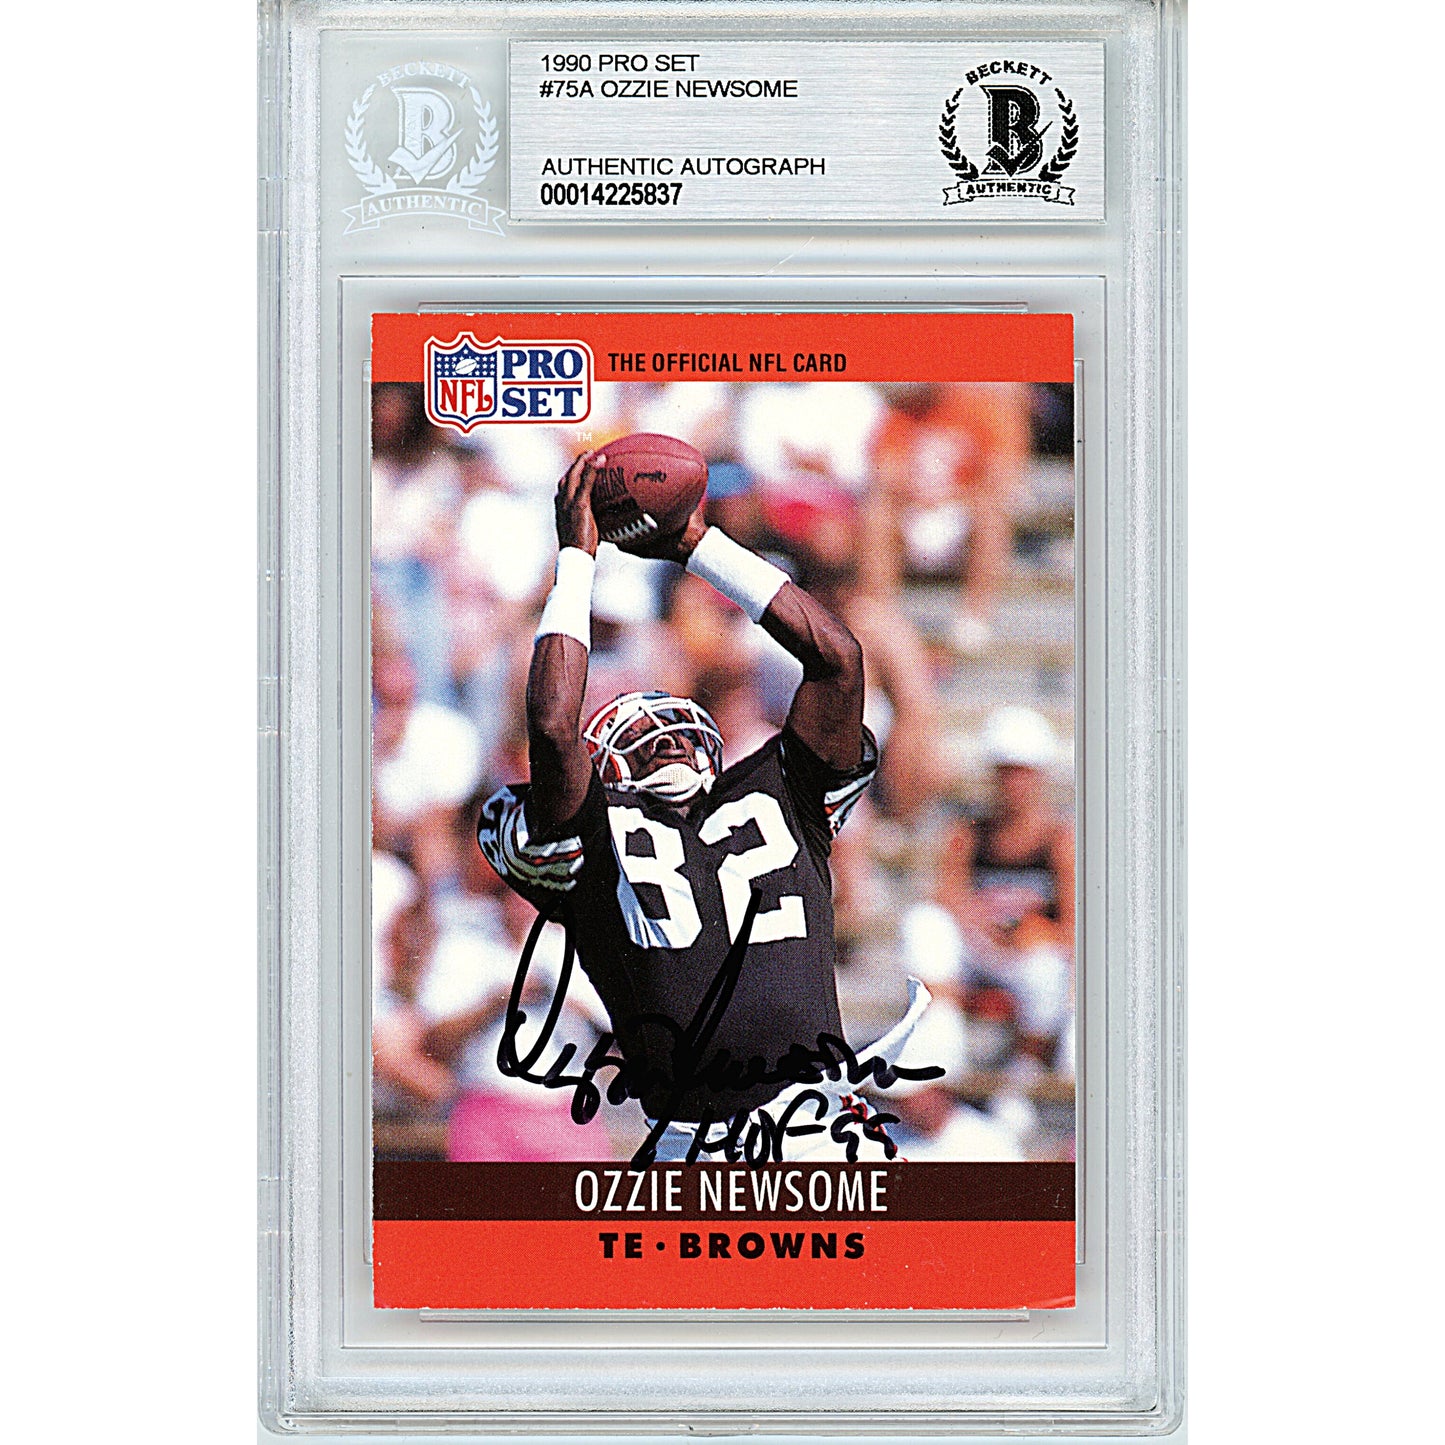 Footballs- Autographed- Ozzie Newsome Signed Cleveland Browns 1990 NFL Pro Set Football Card Beckett BAS Slabbed 00014225837 - 101